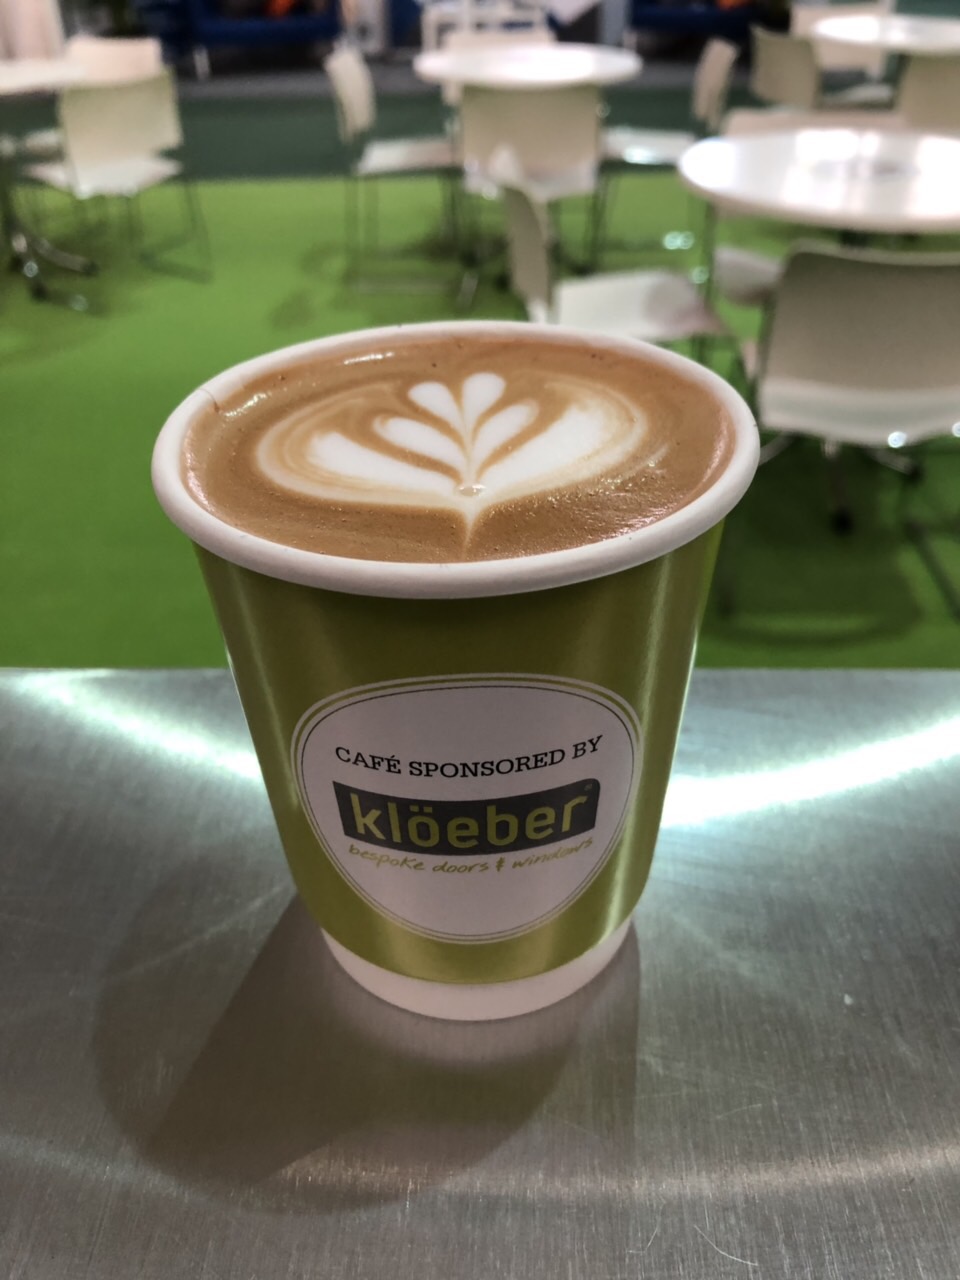 The Mobile Coffee Bean Build It Live Kloeber branded cup latte art